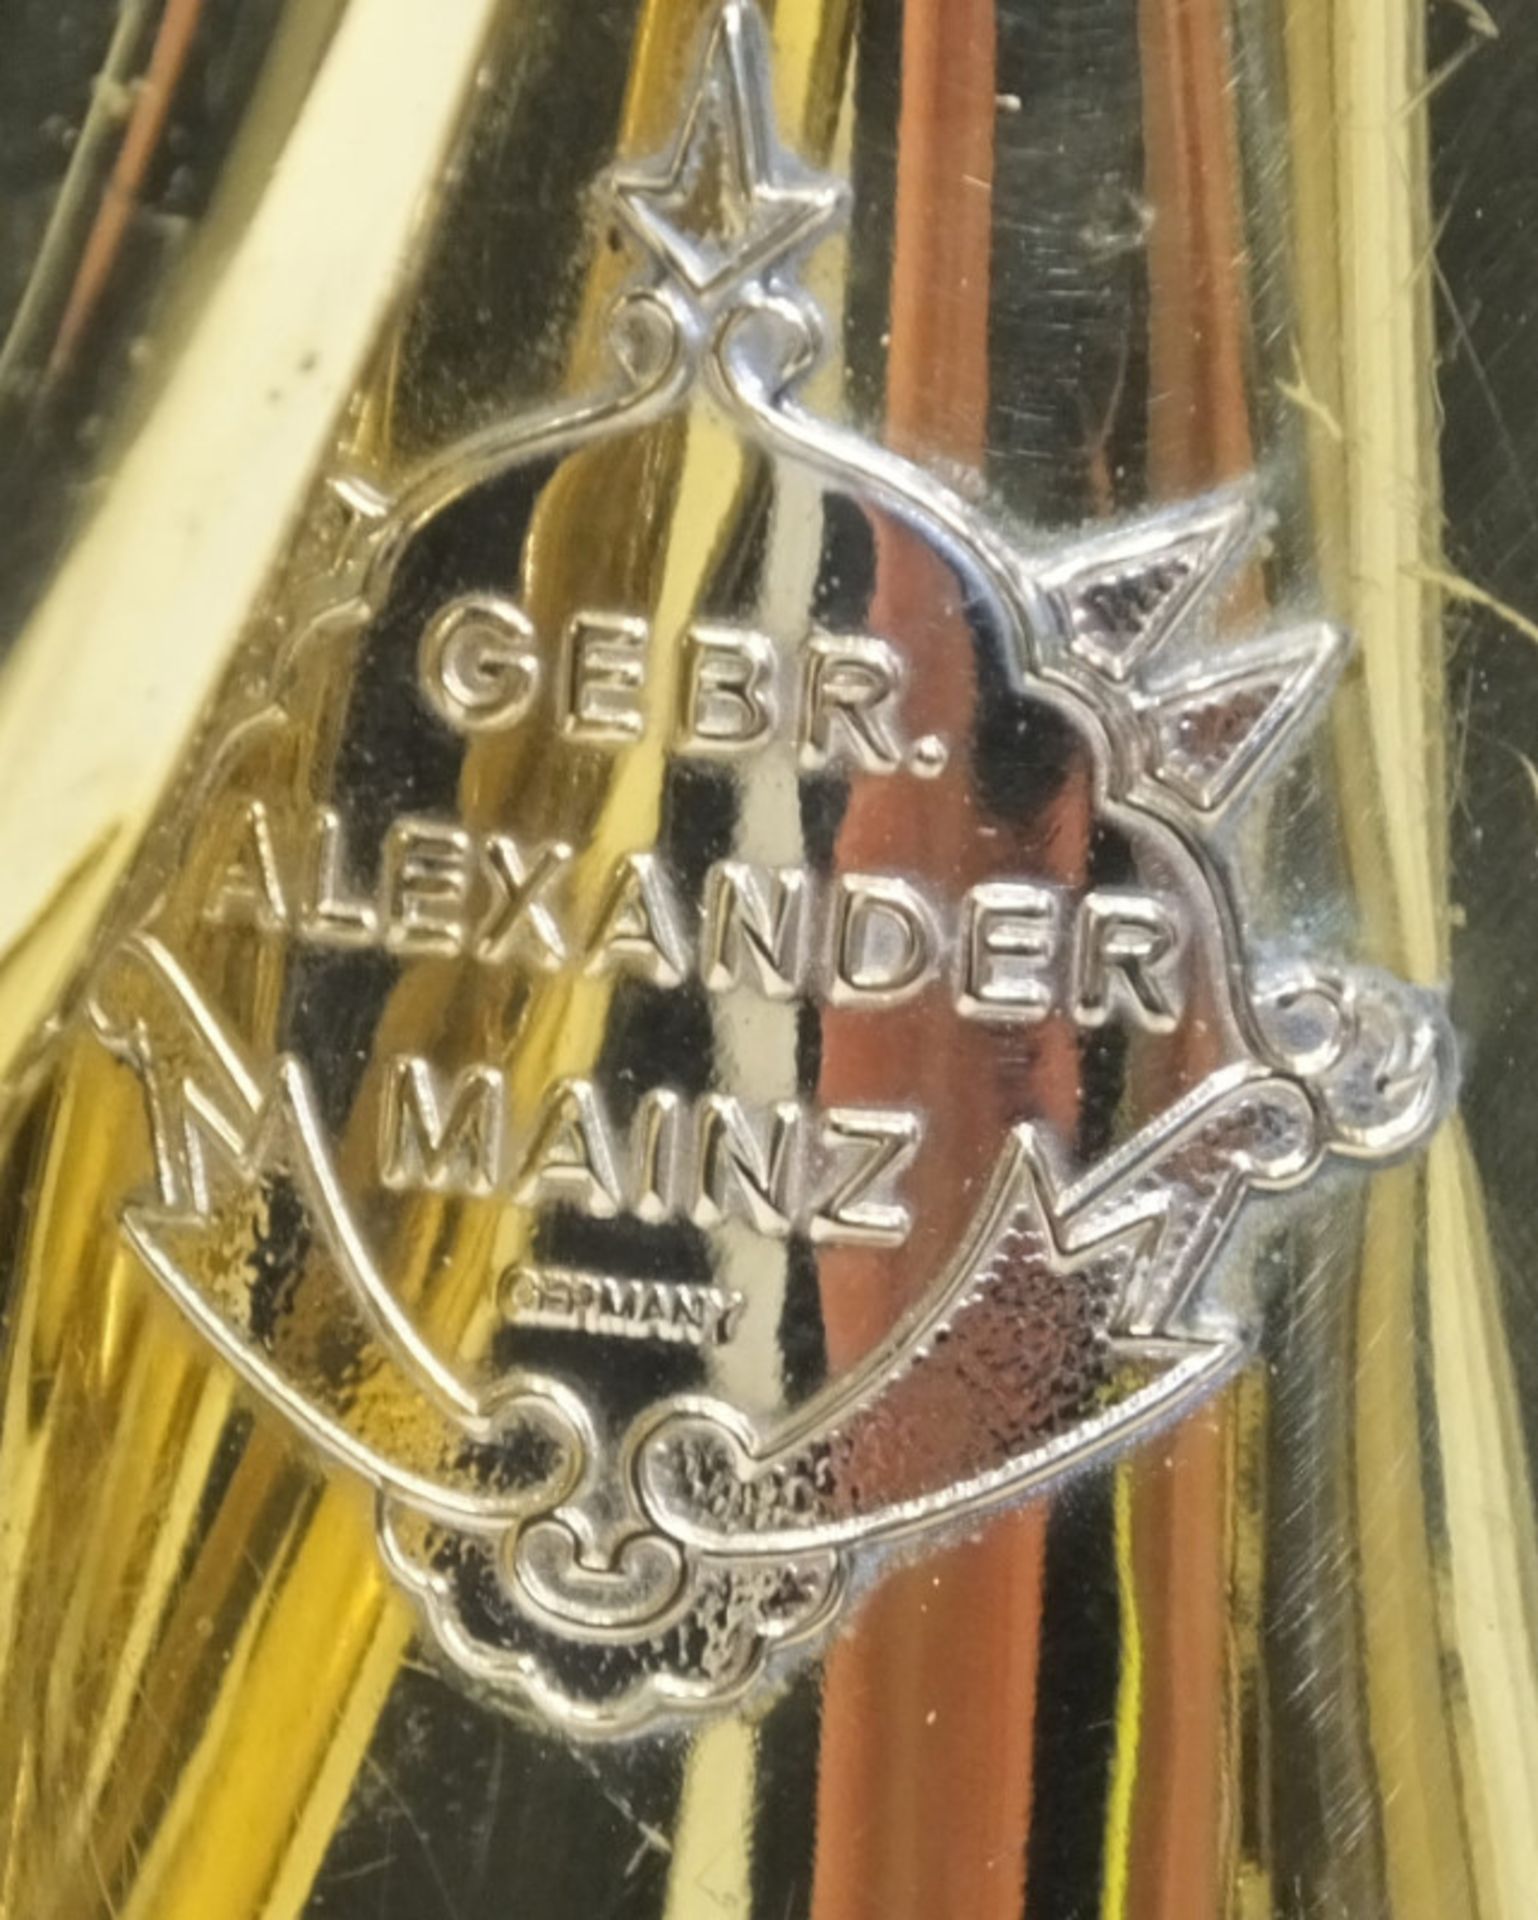 Gebr Alexander Mainz Mod 103 French Horn in case - Serial Number - 17510. - Image 16 of 20